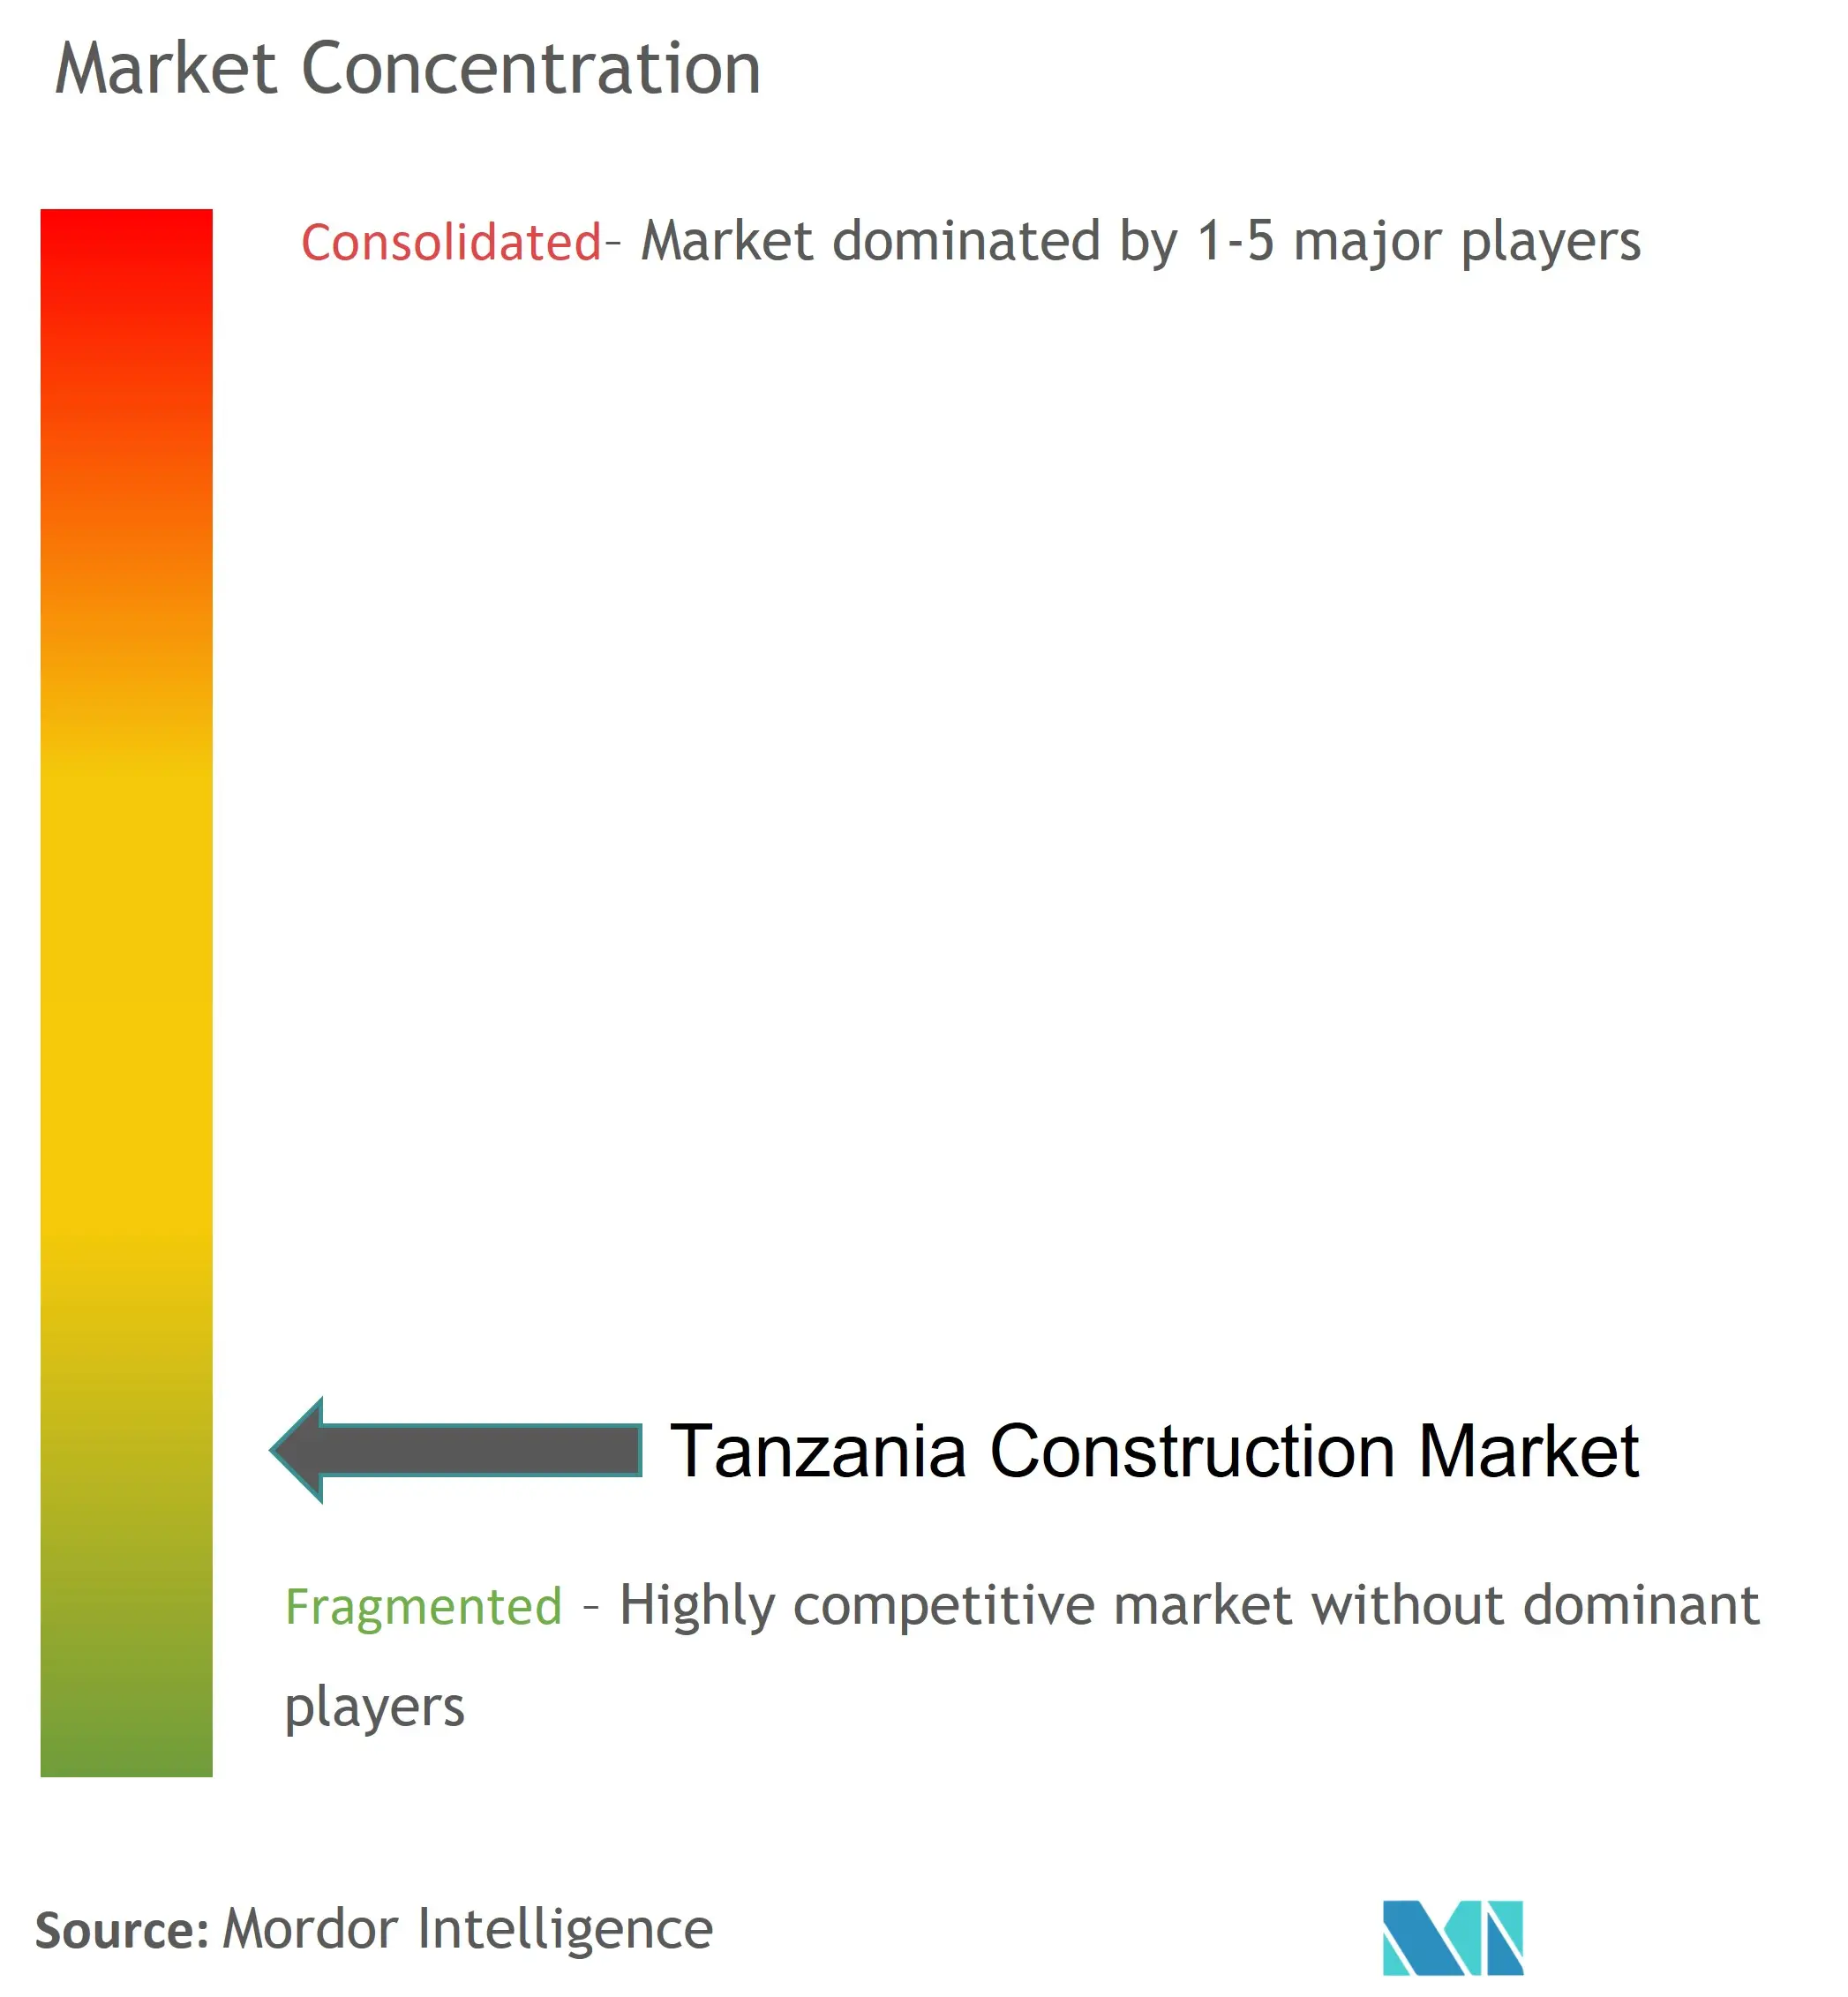 Tanzania Construction Market Concentration